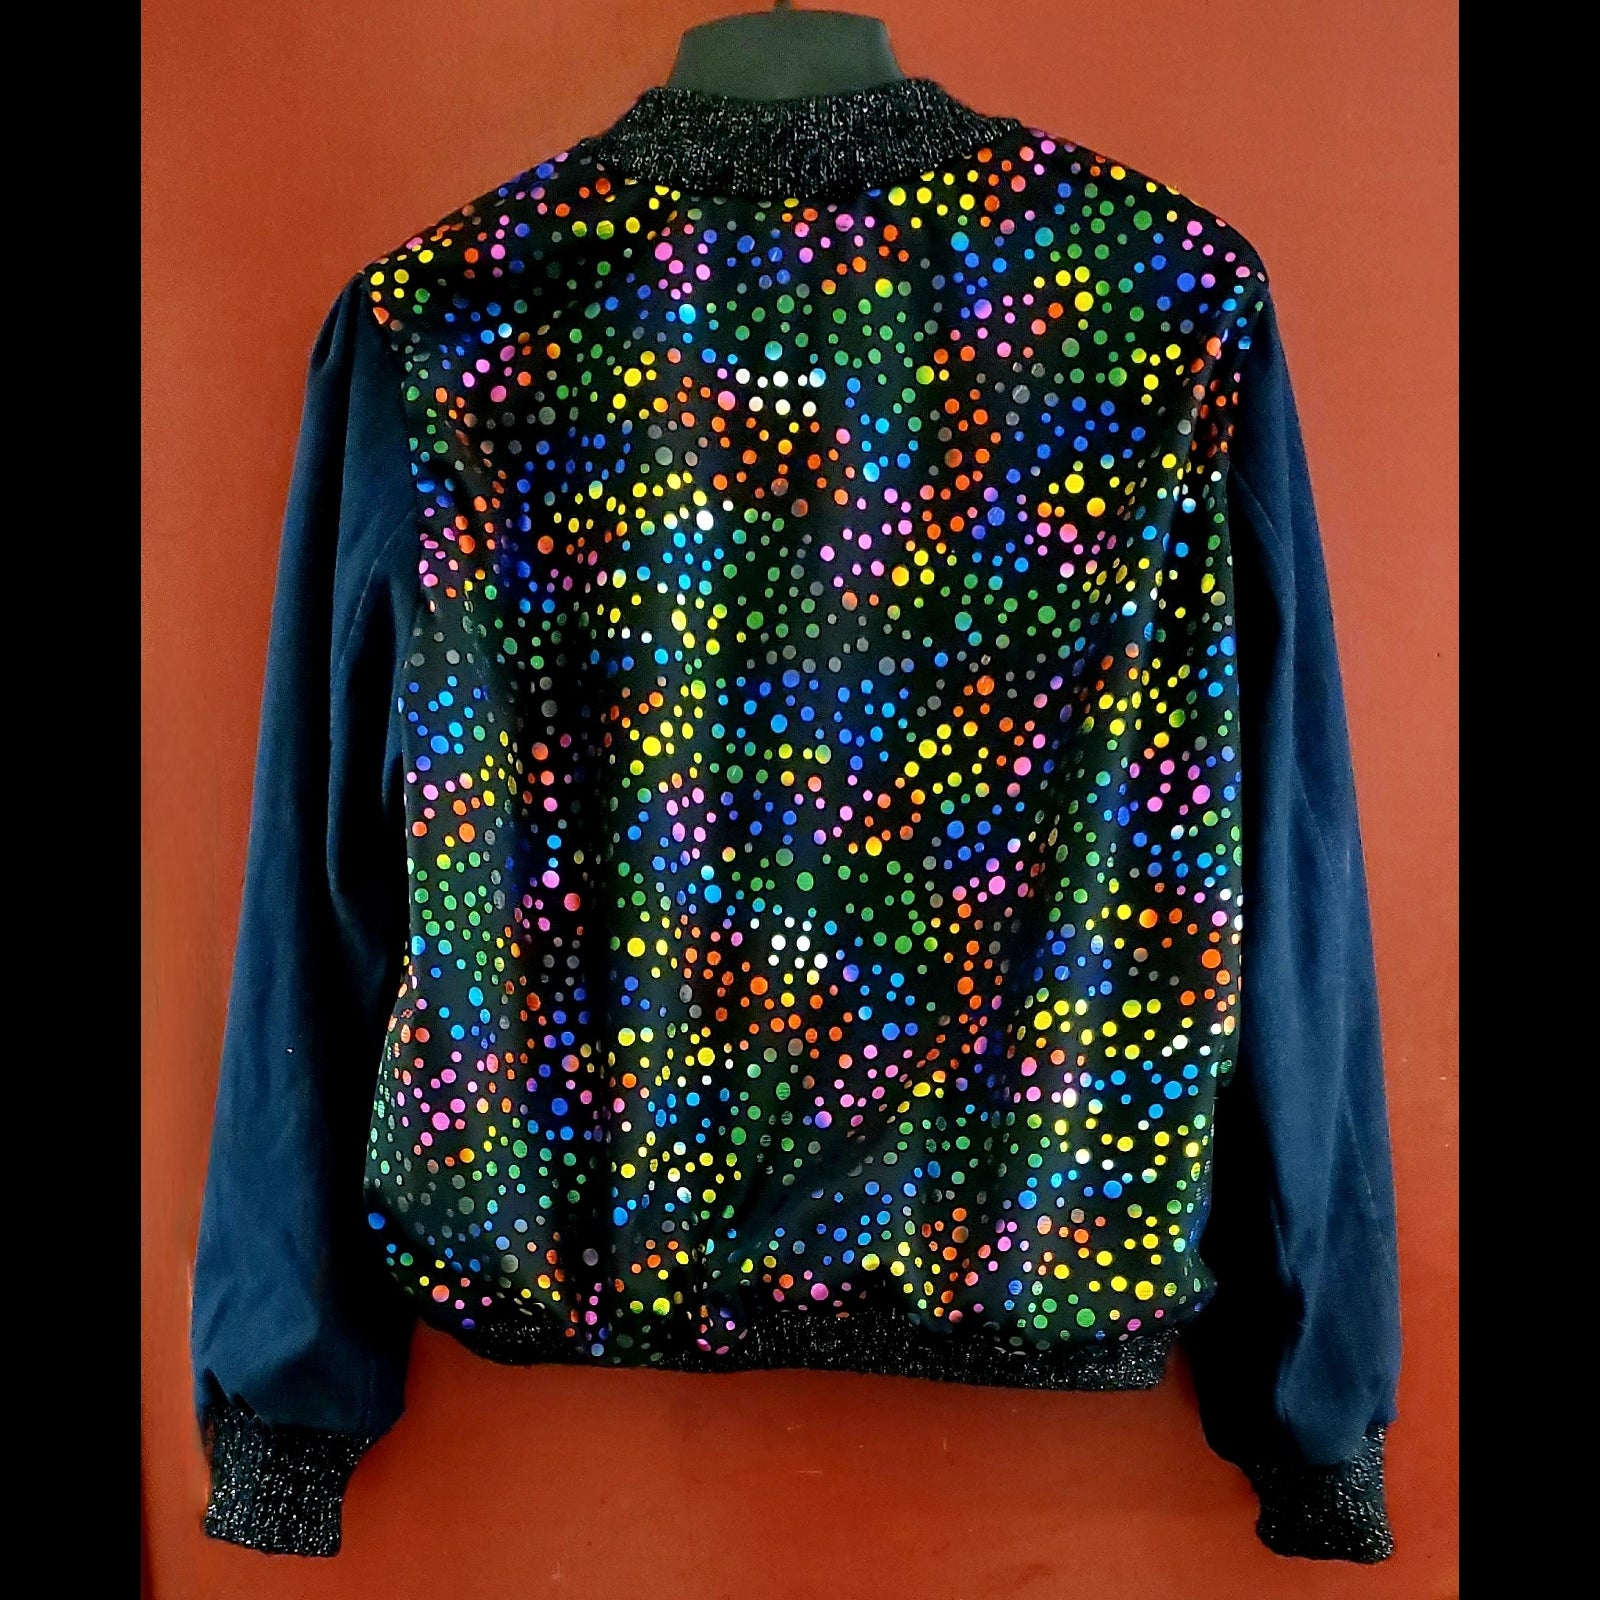 Back view of Multi-coloured polka dot and denim bomber jacket